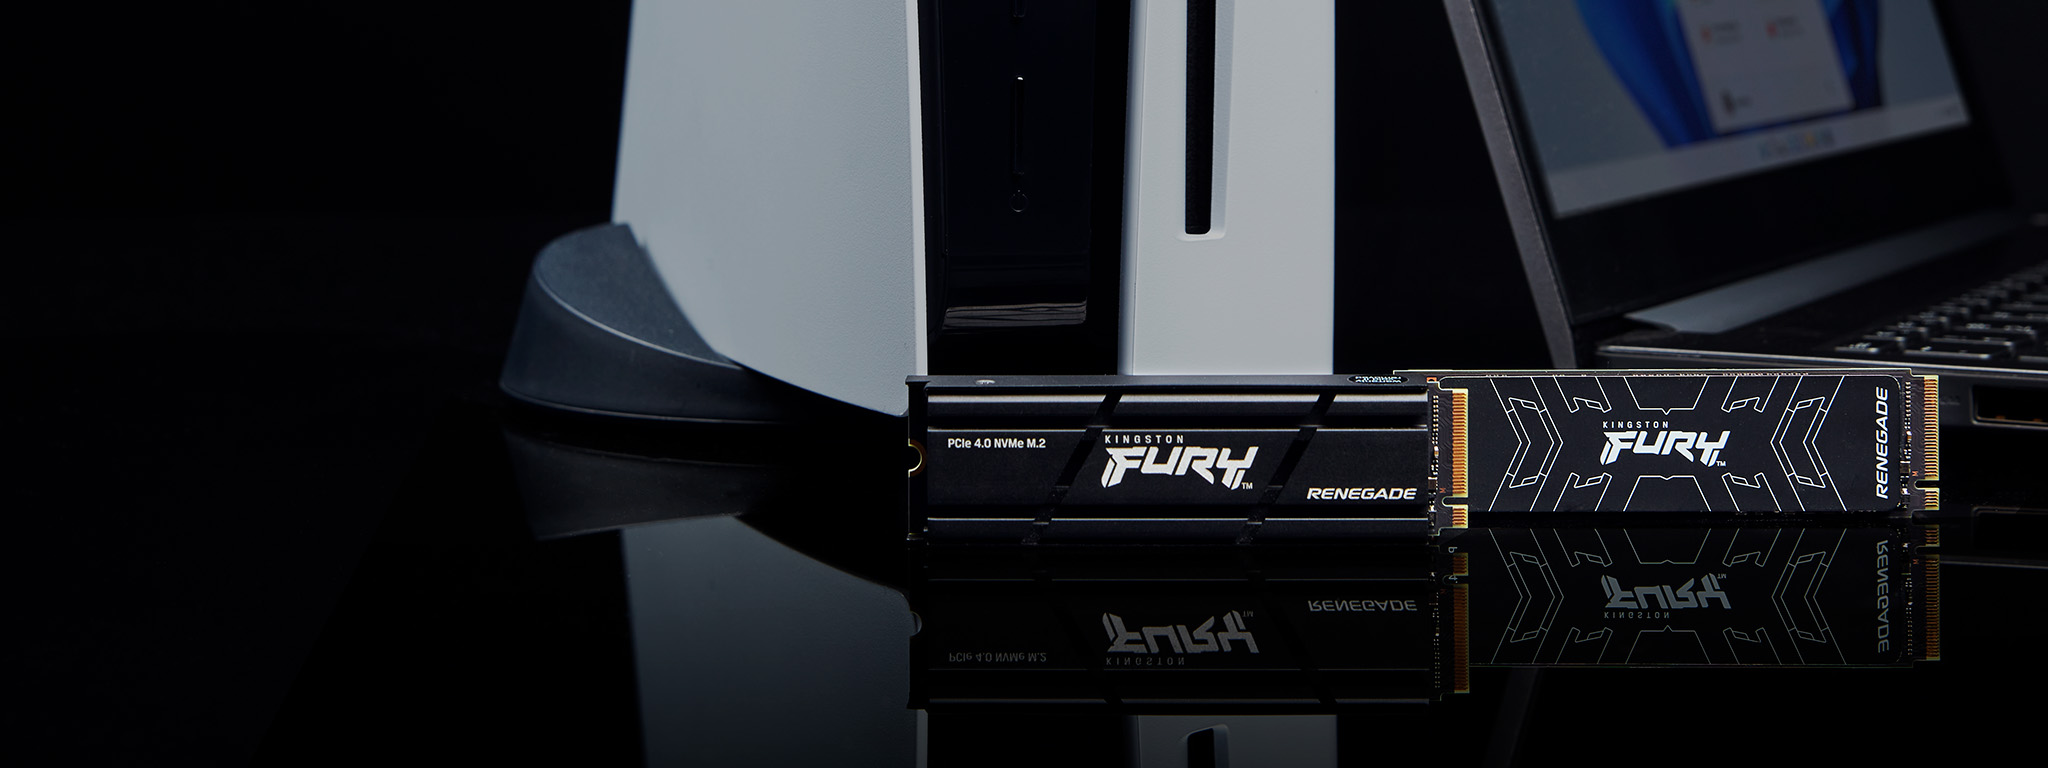 Dwa dyski SSD Kingston FURY Renegade, z radiatorem i bez, leżące obok konsoli PS5 i laptopa.